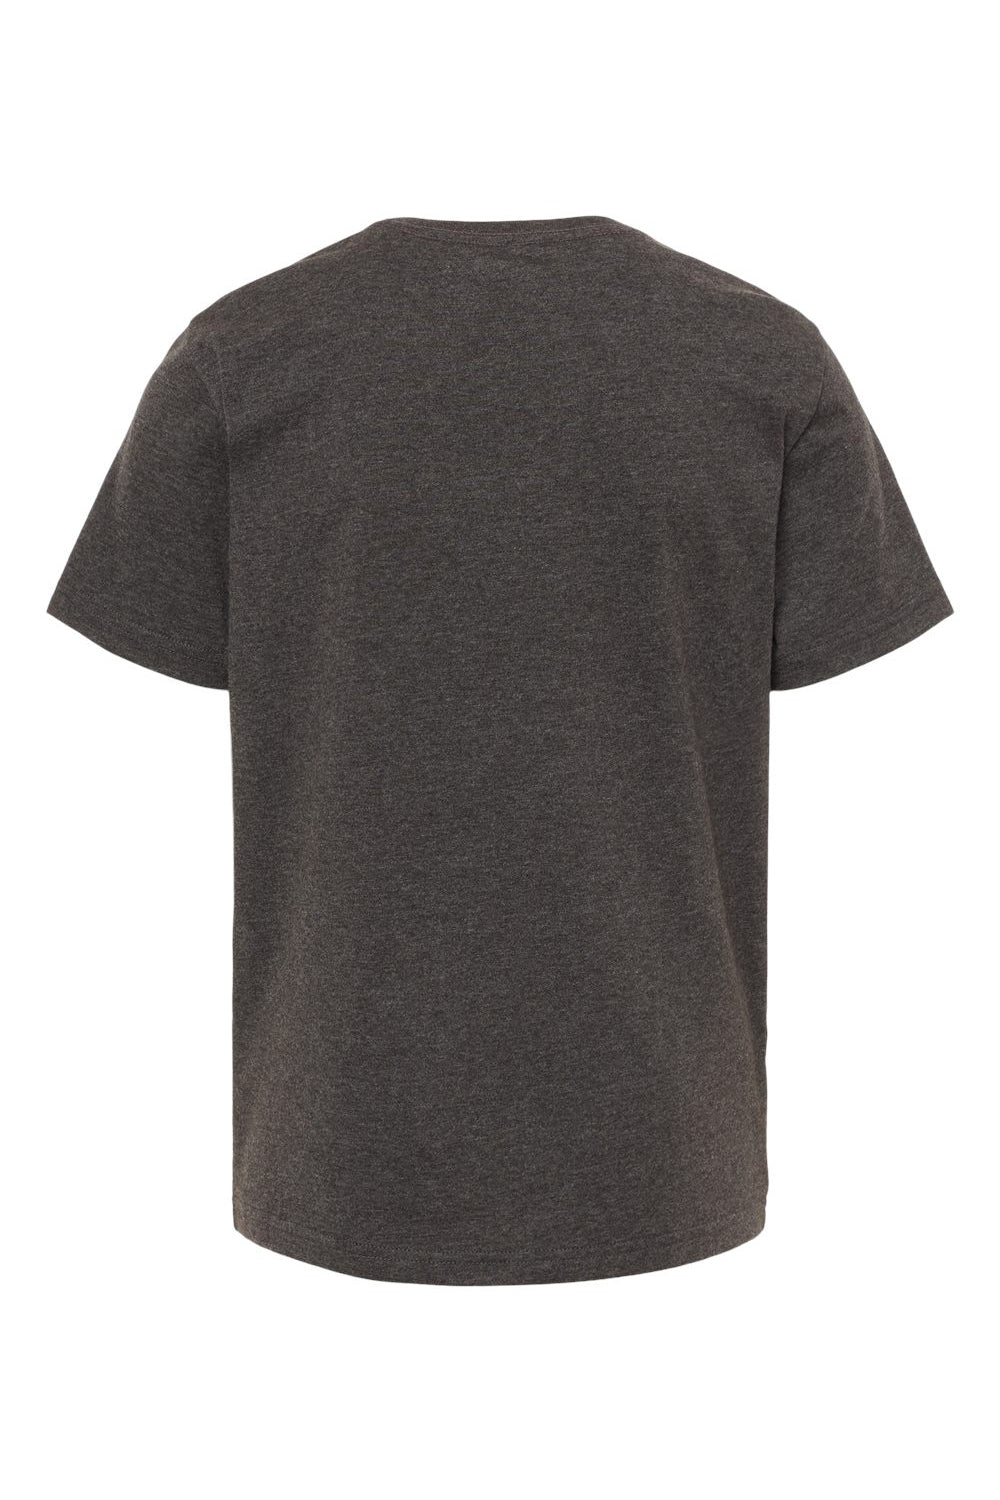 Kastlfel 2015 Youth RecycledSoft Short Sleeve Crewneck T-Shirt Carbon Grey Flat Back